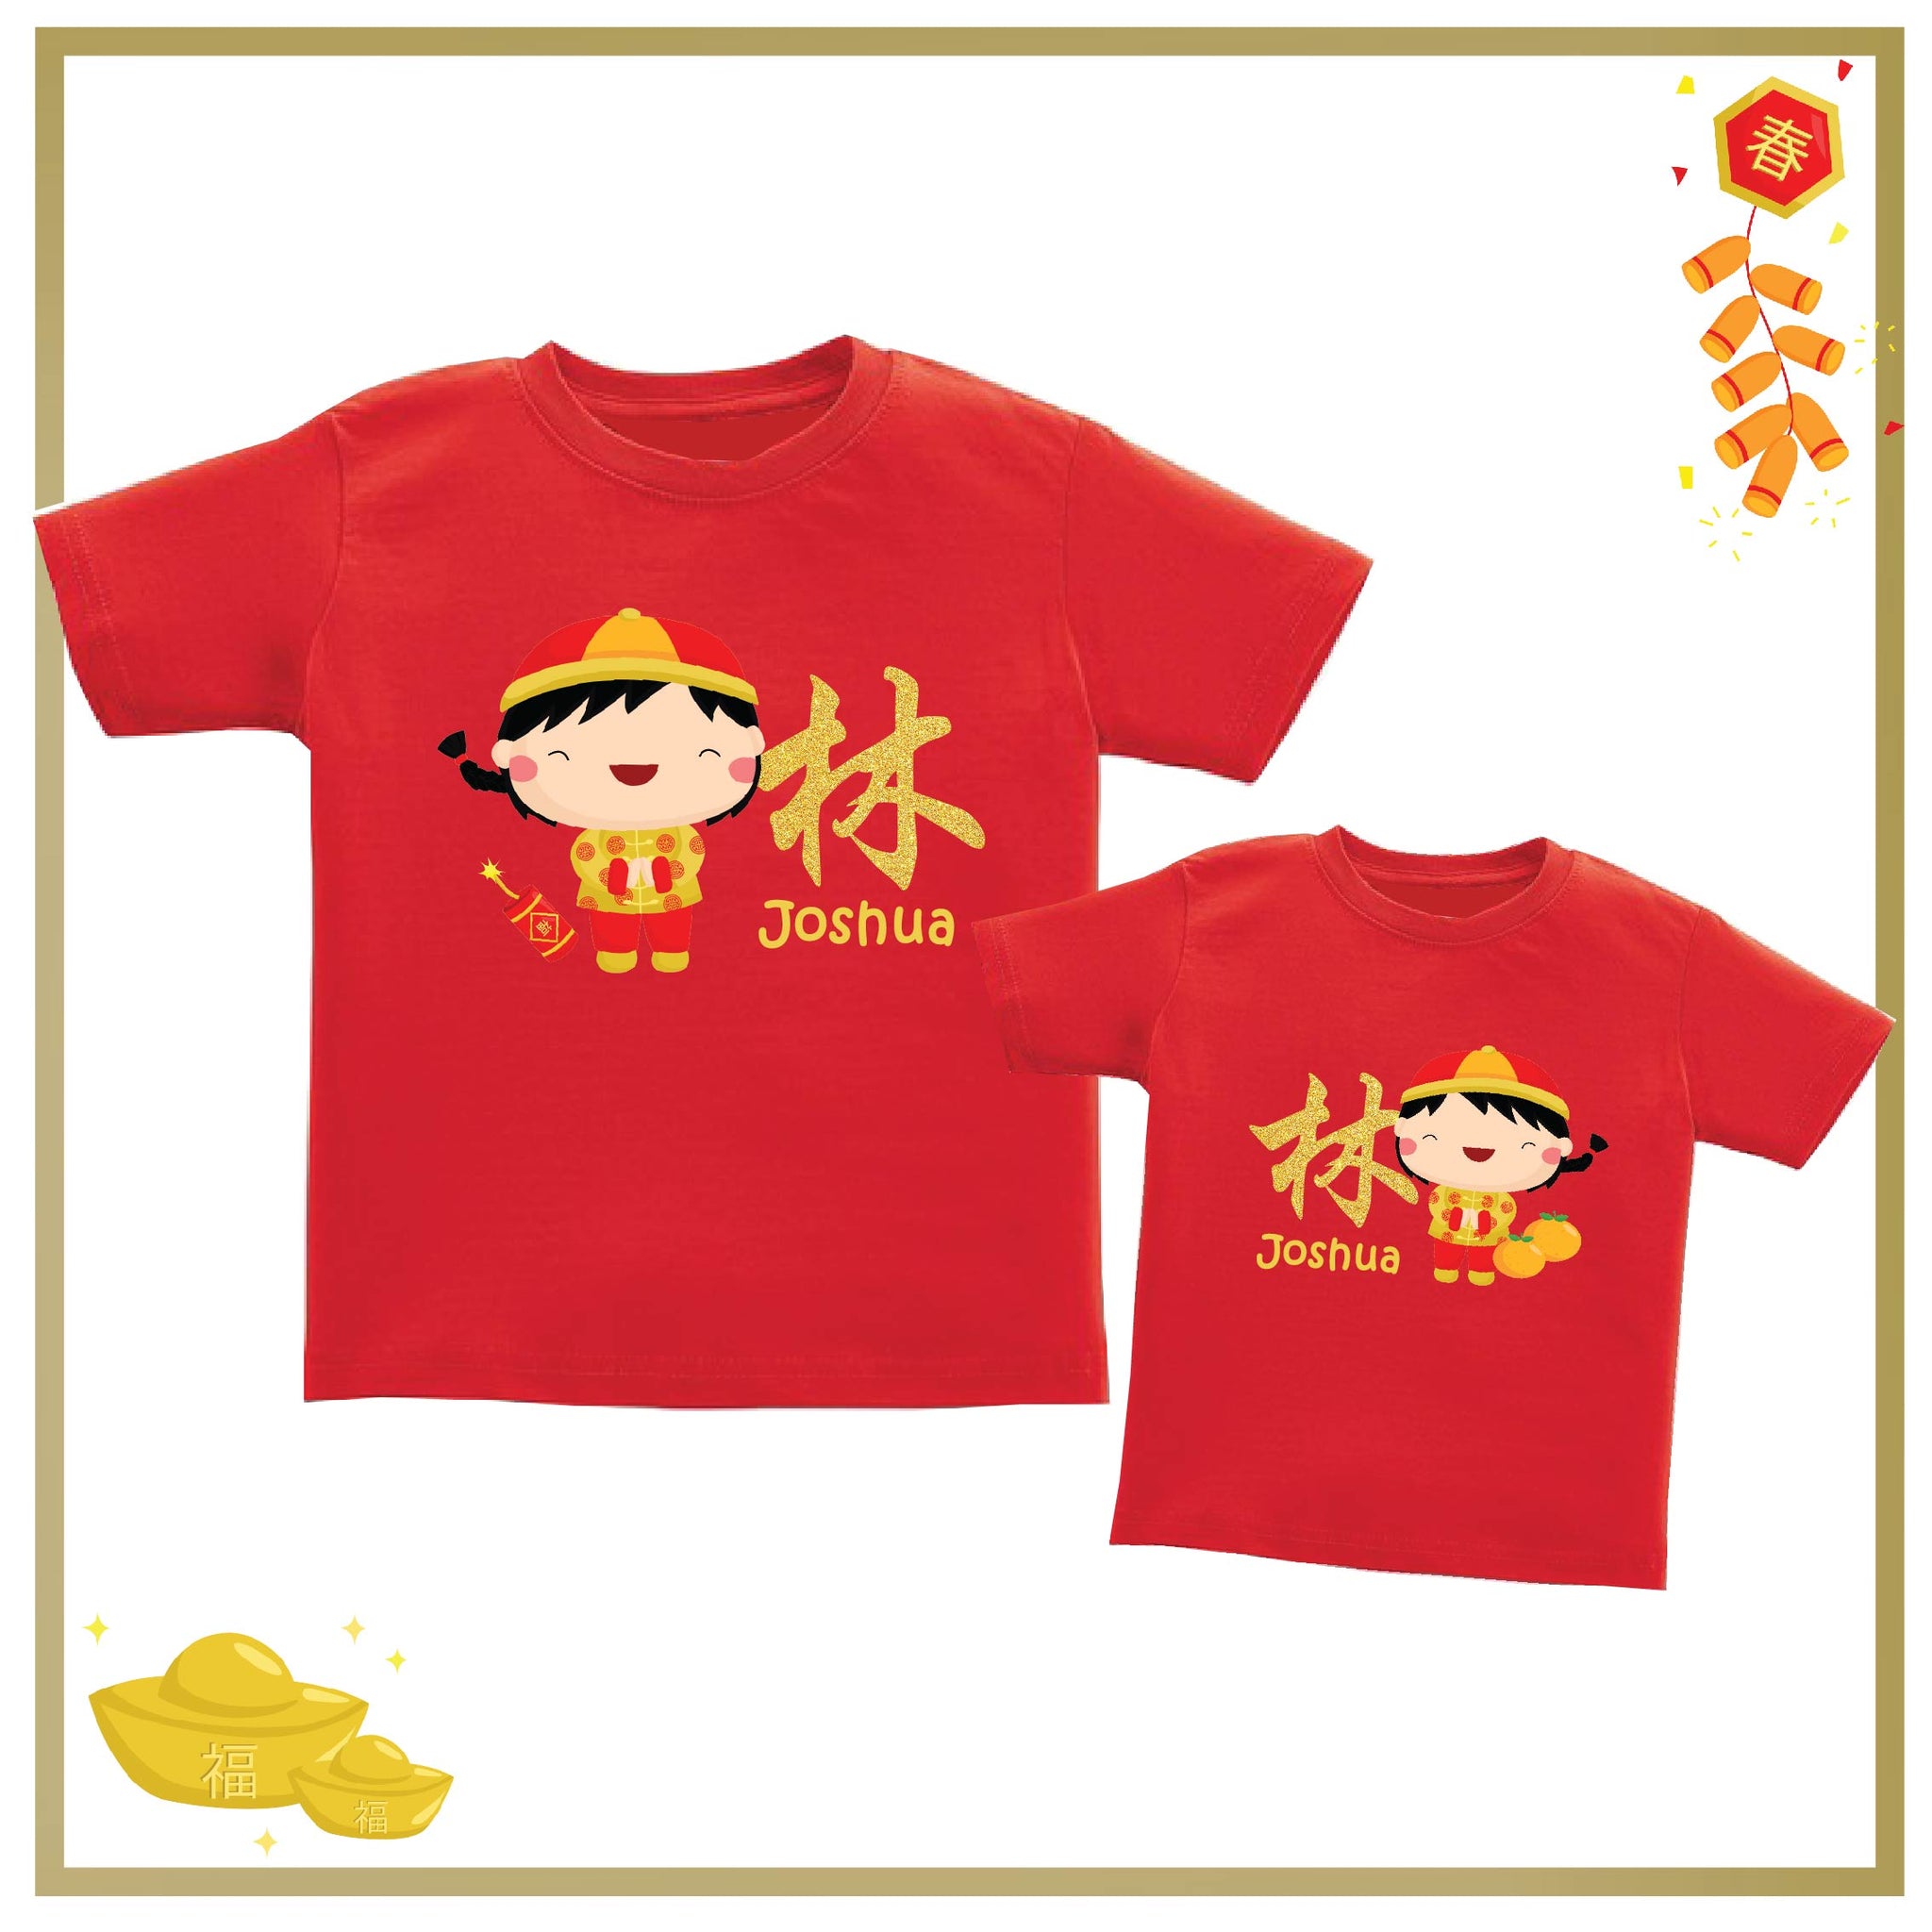 Personalised Family Tee Shirts - CNY Joyous Boy Red